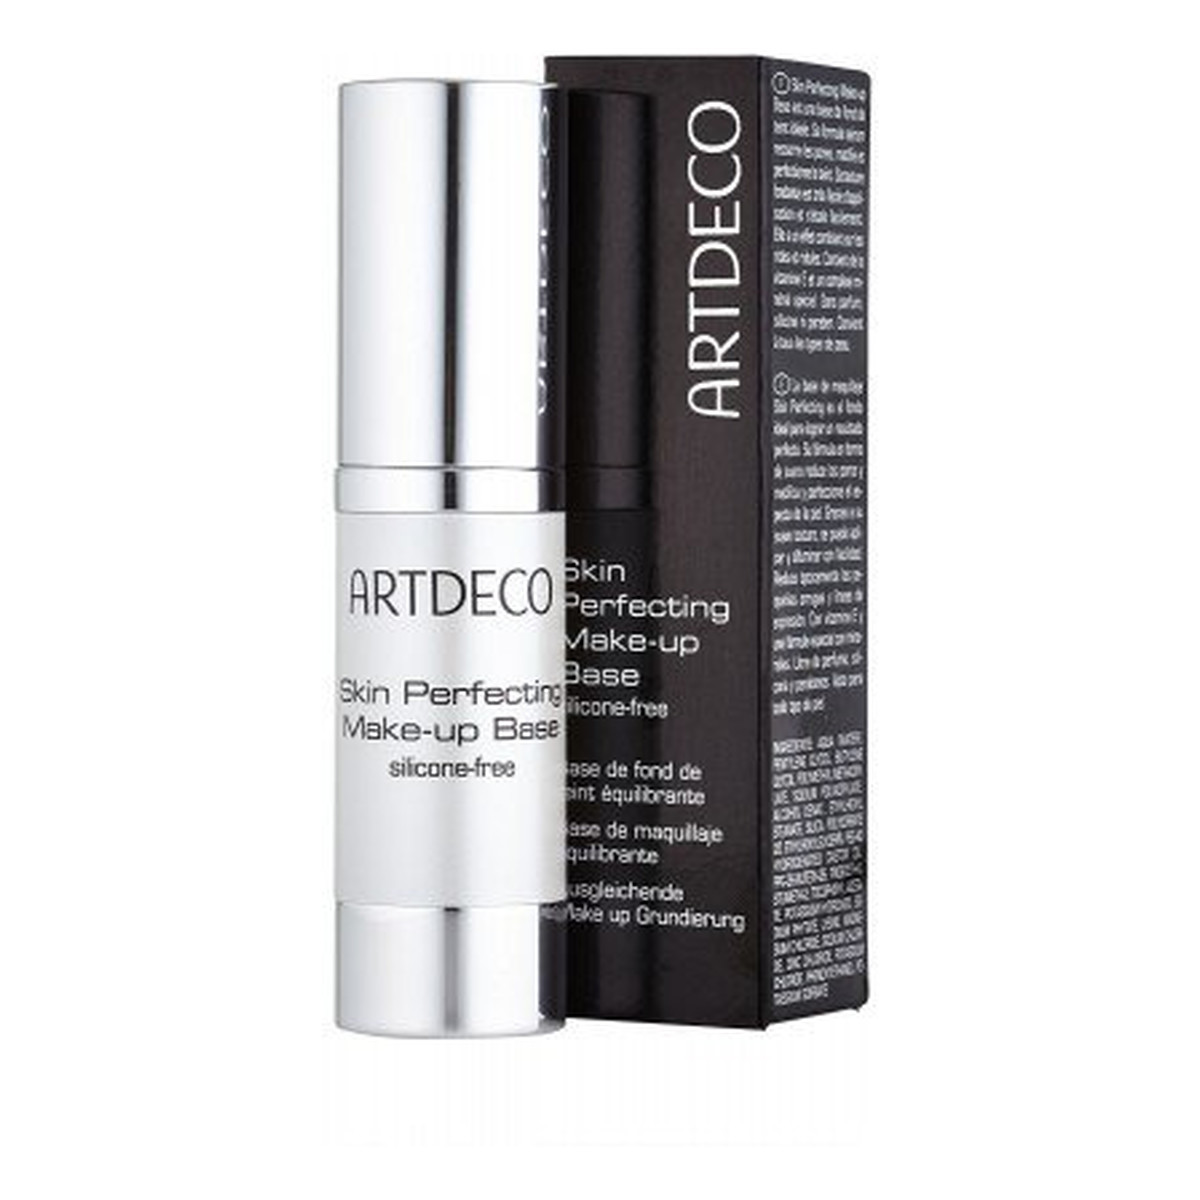 ArtDeco Skin Perfecting Make-up Base Baza pod podkład 15ml